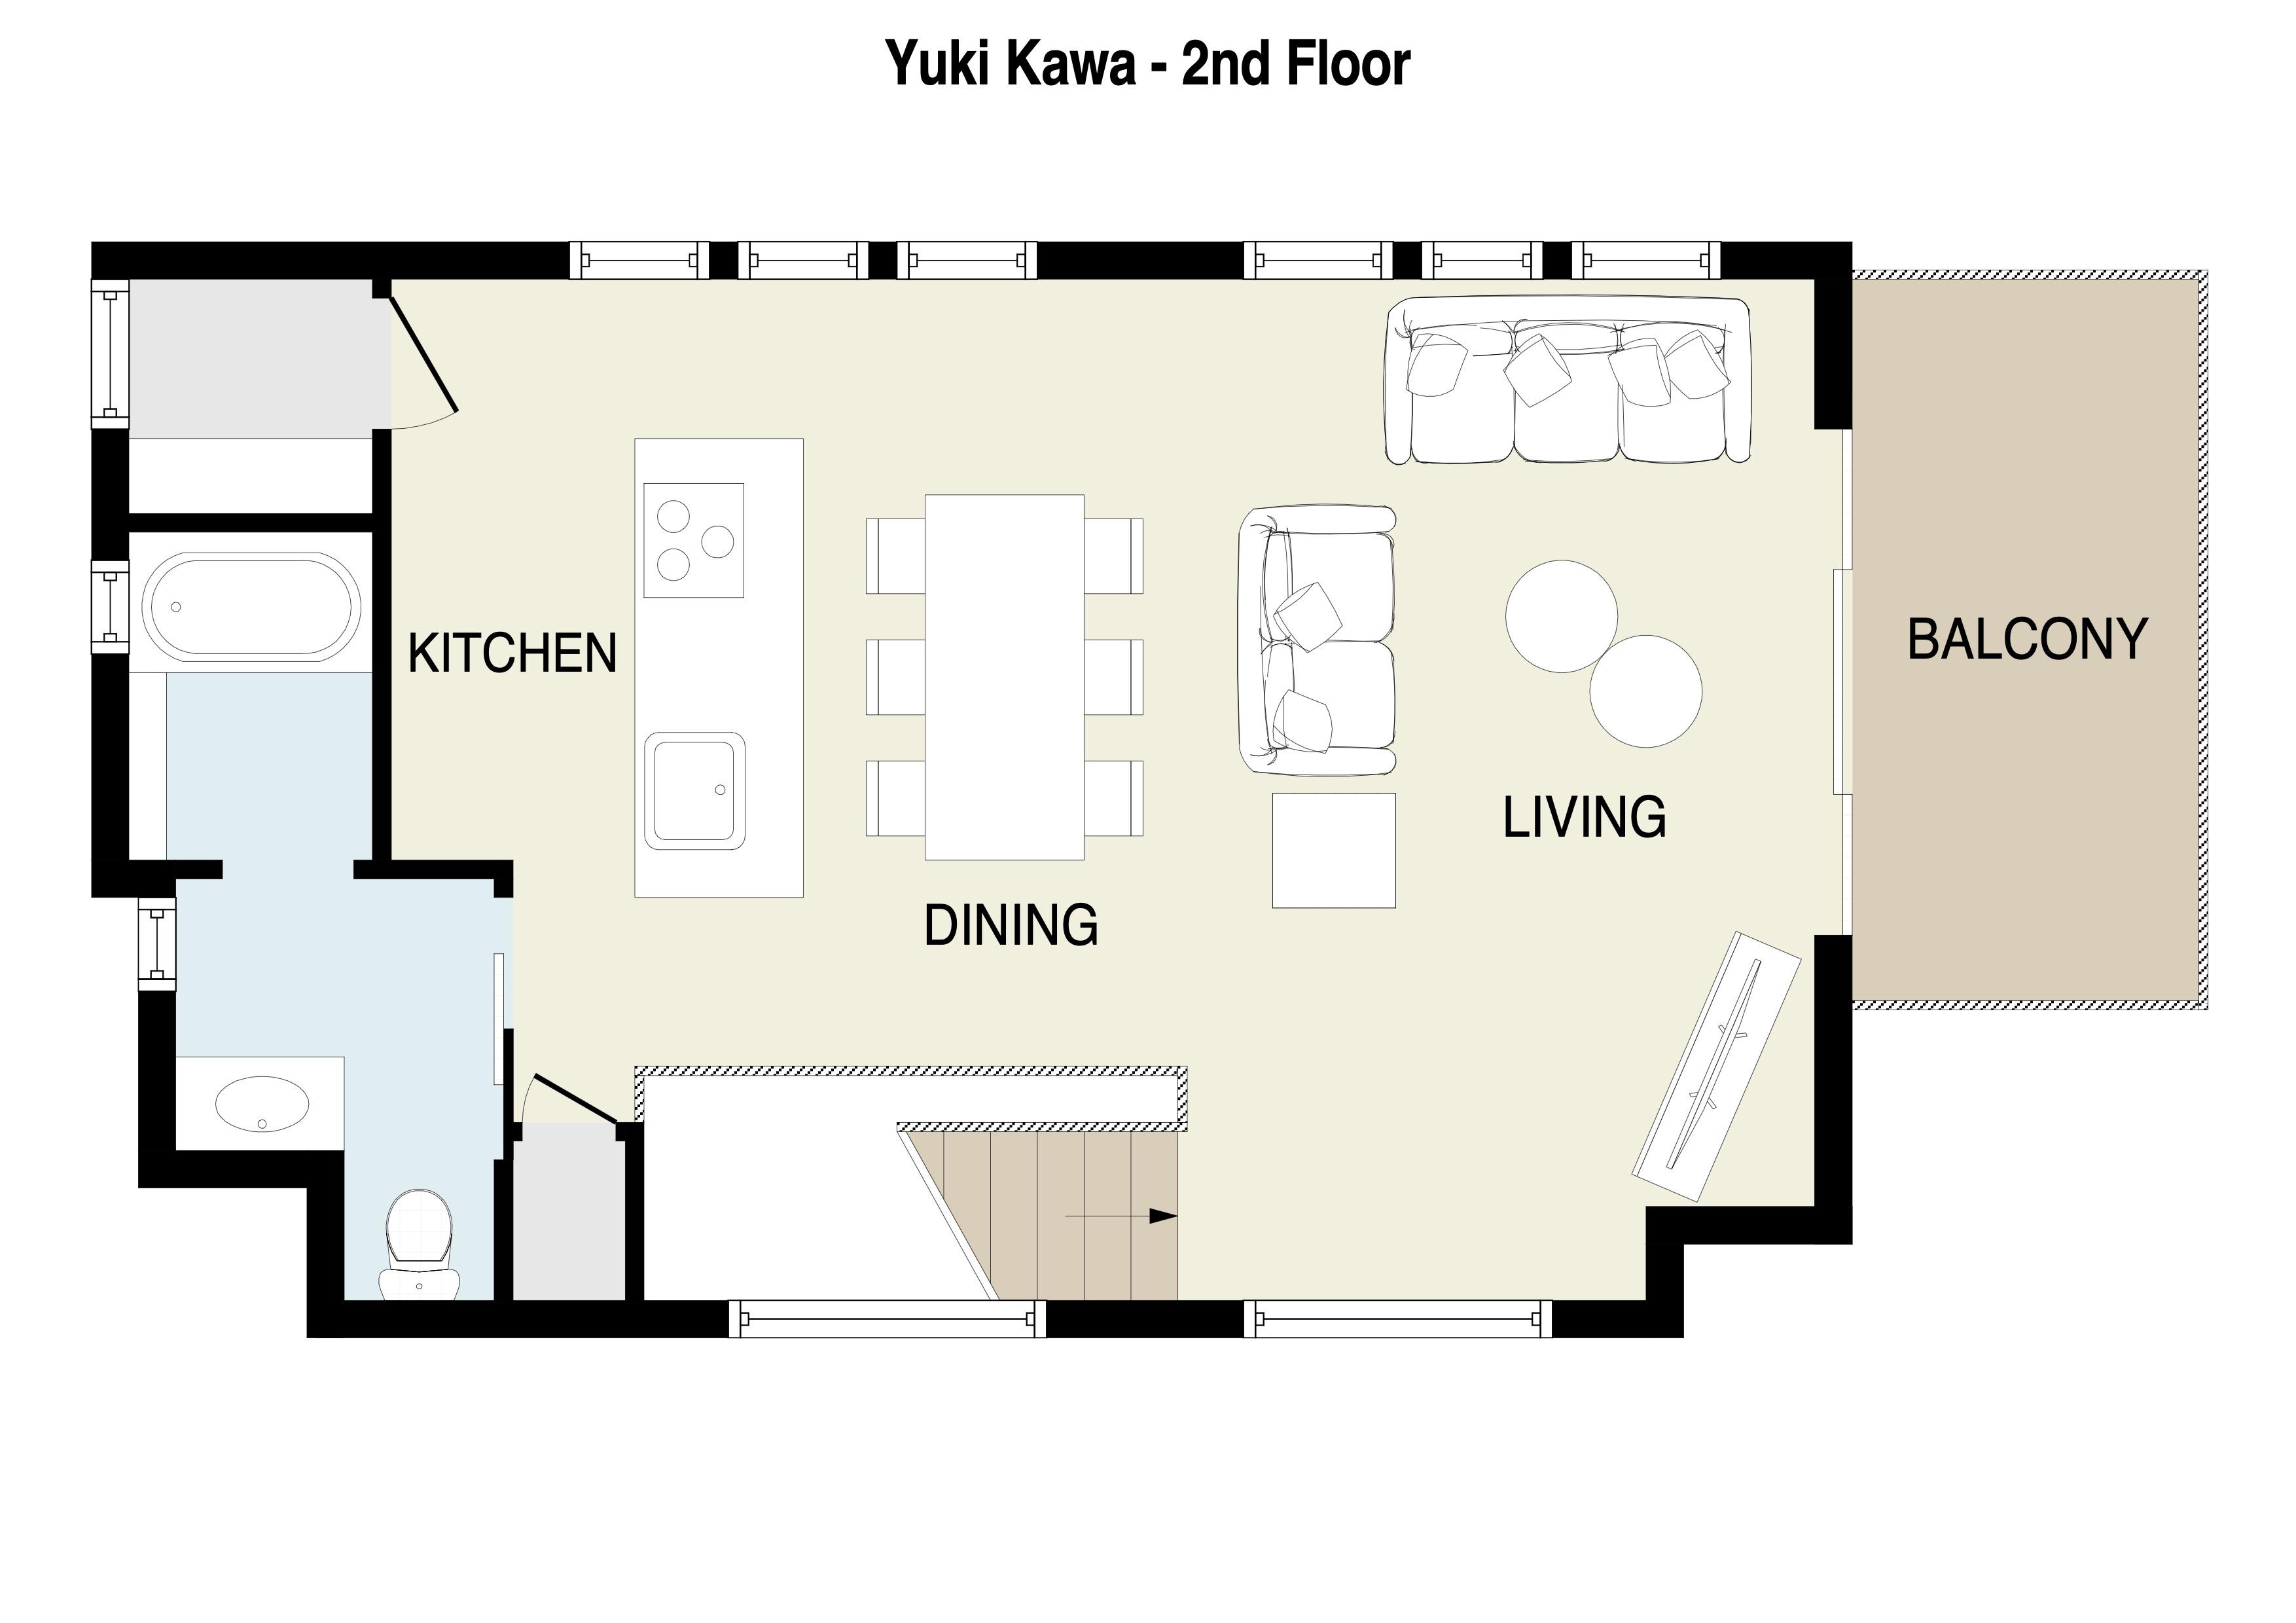 Yuki Kawa 2nd Floor Plan